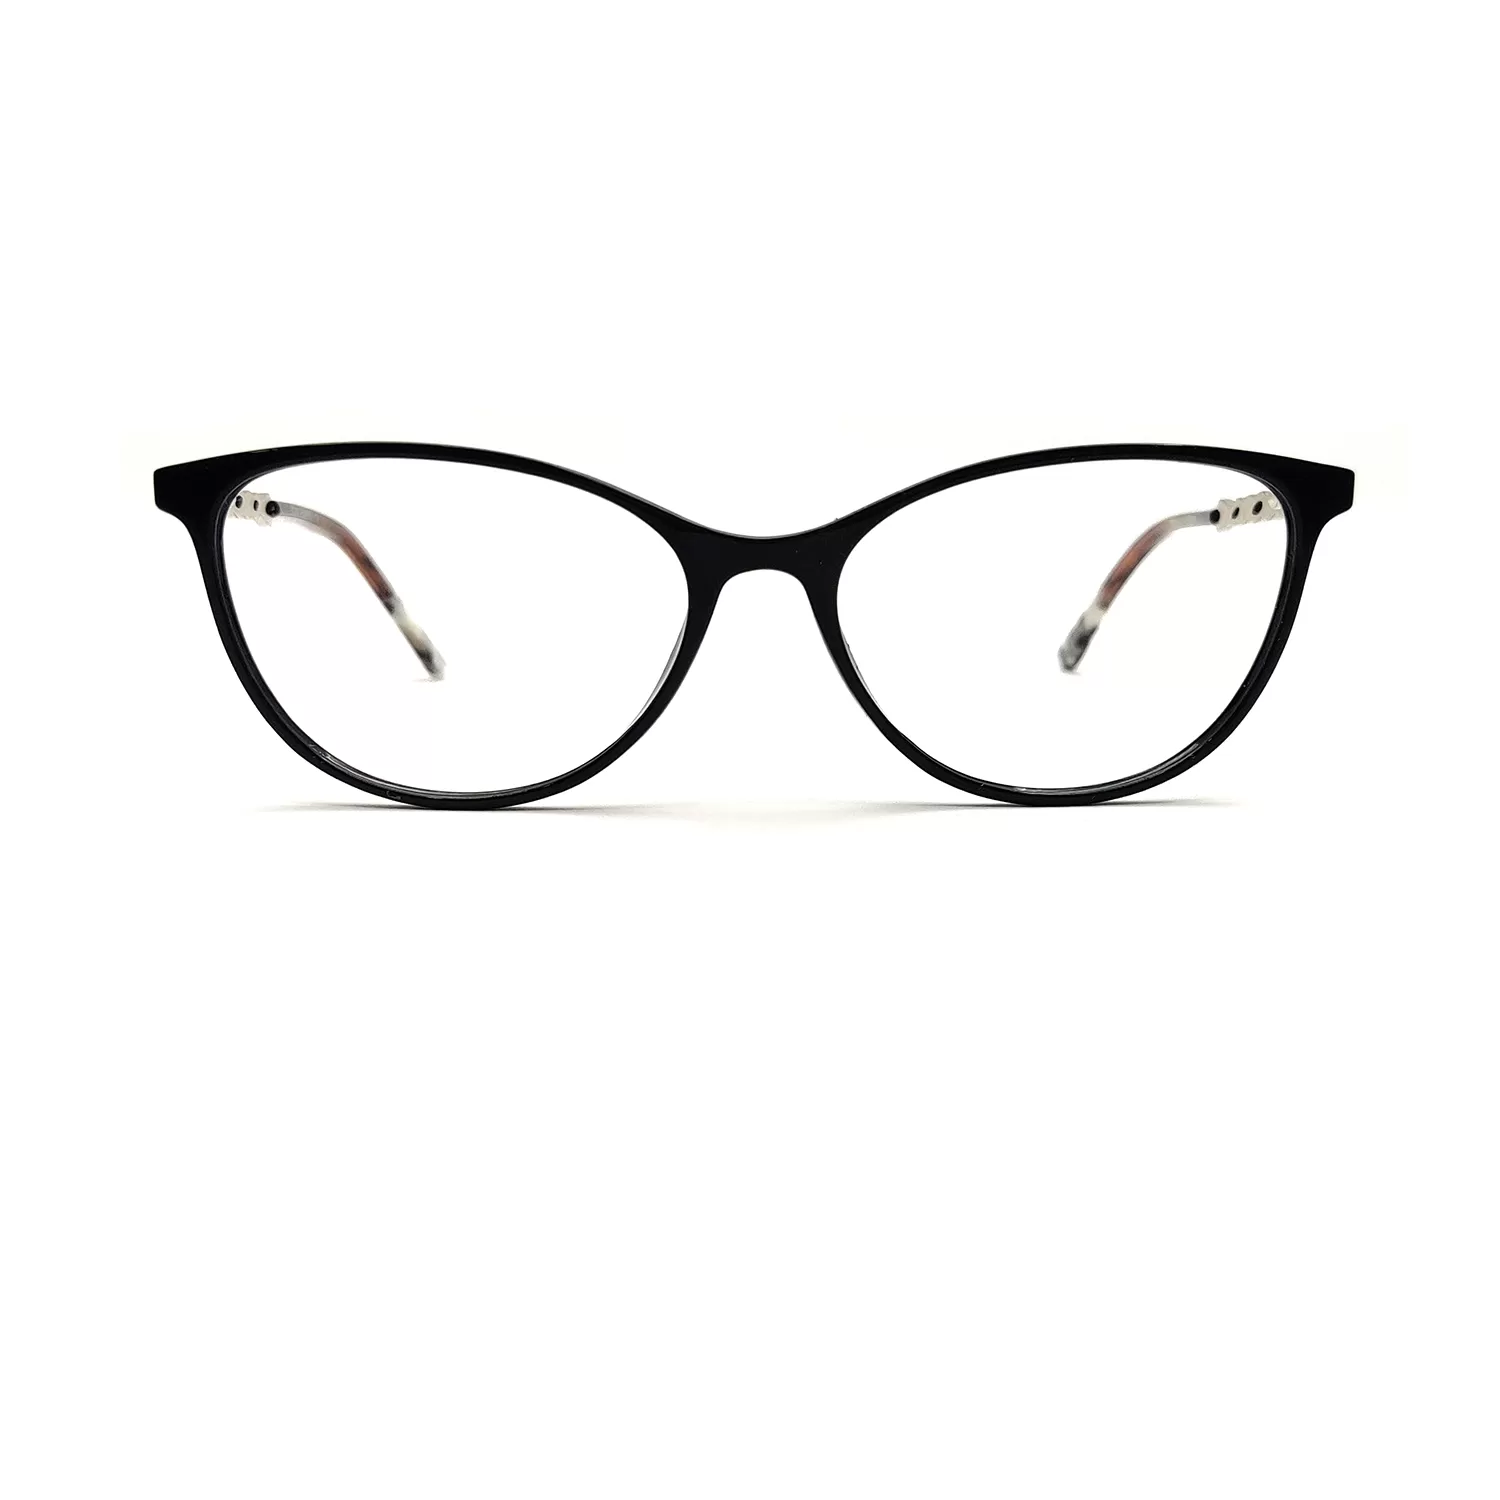 Buy latest eyeglasses online at chashmah.com